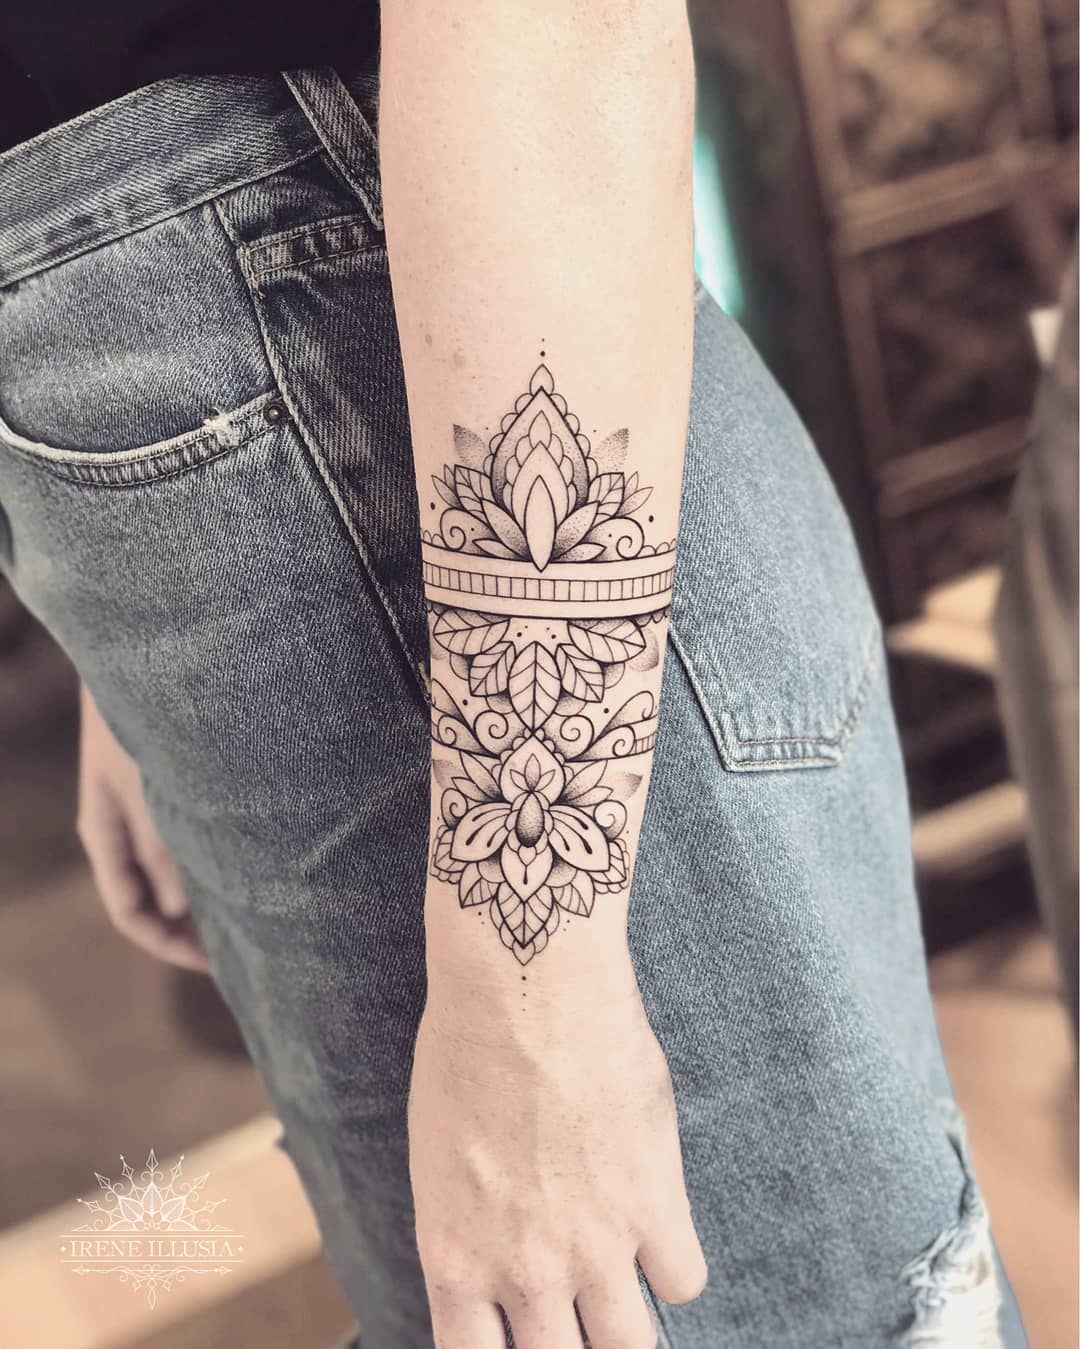 Female Wrist Tattoo Ideas Small Designs (56)